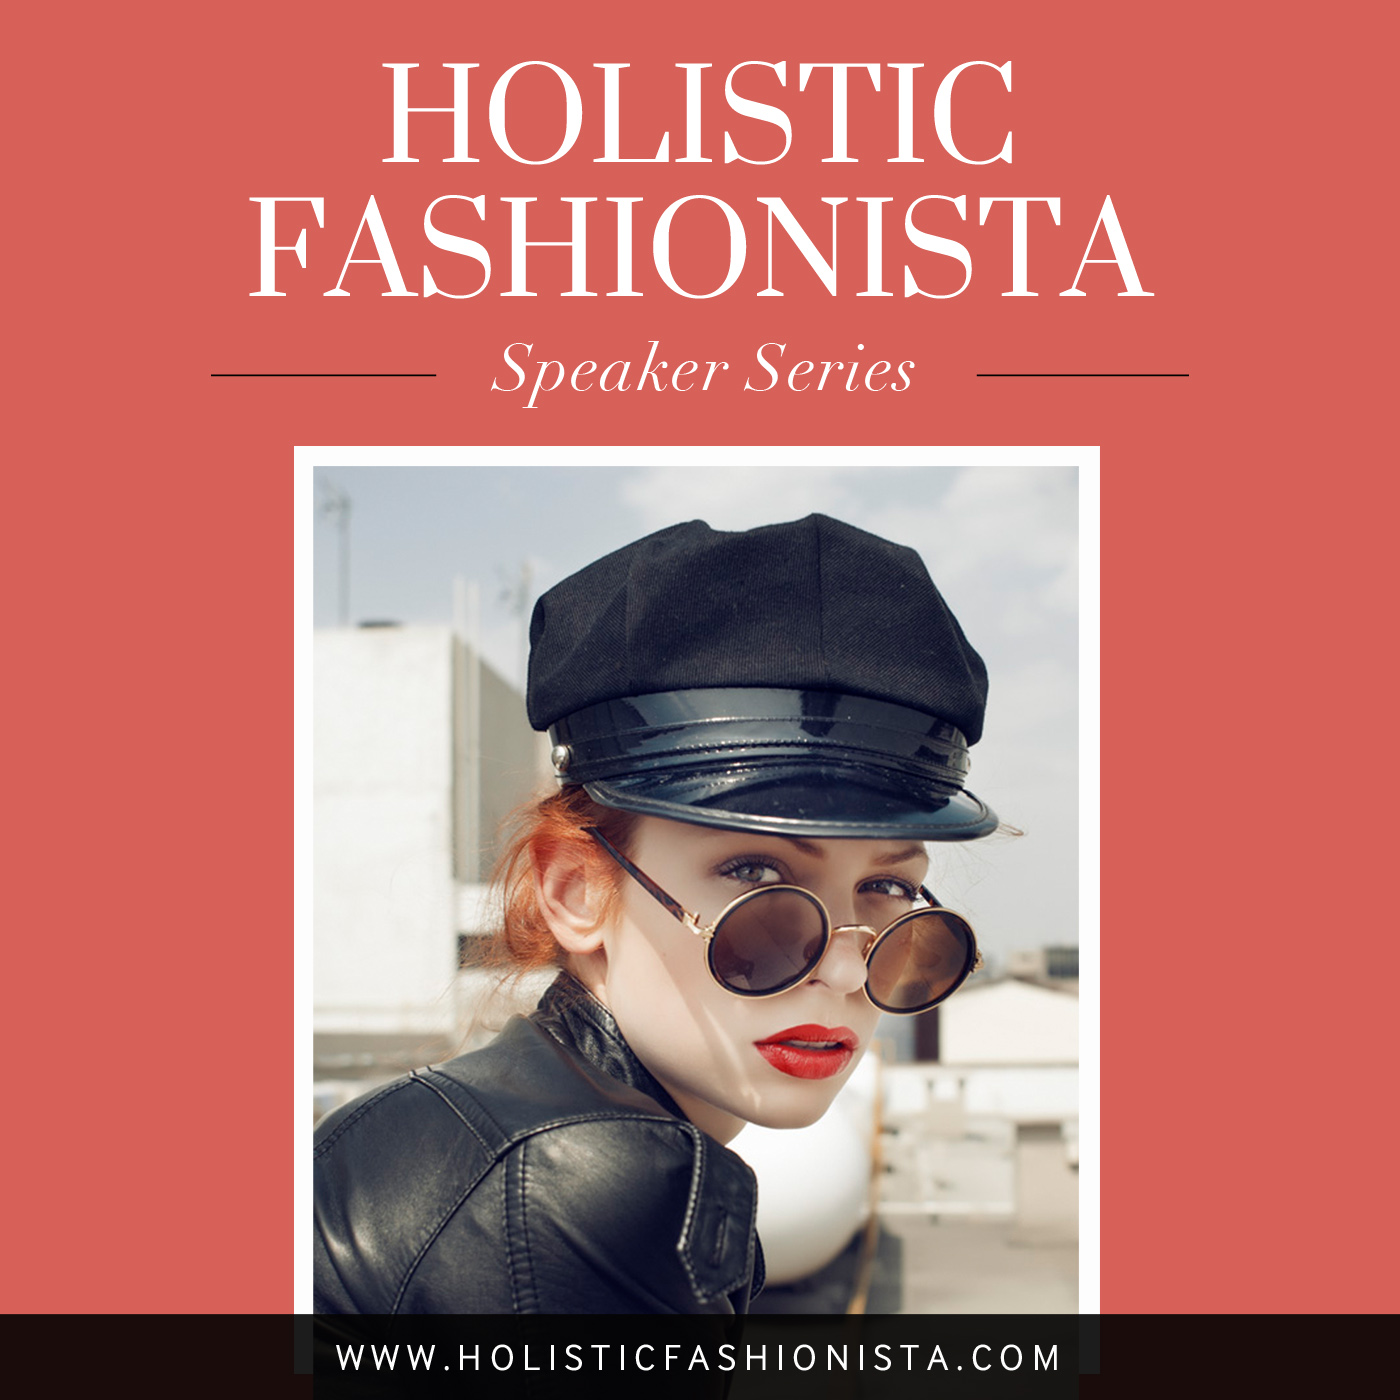 Speaker Series - Holistic Fashionista